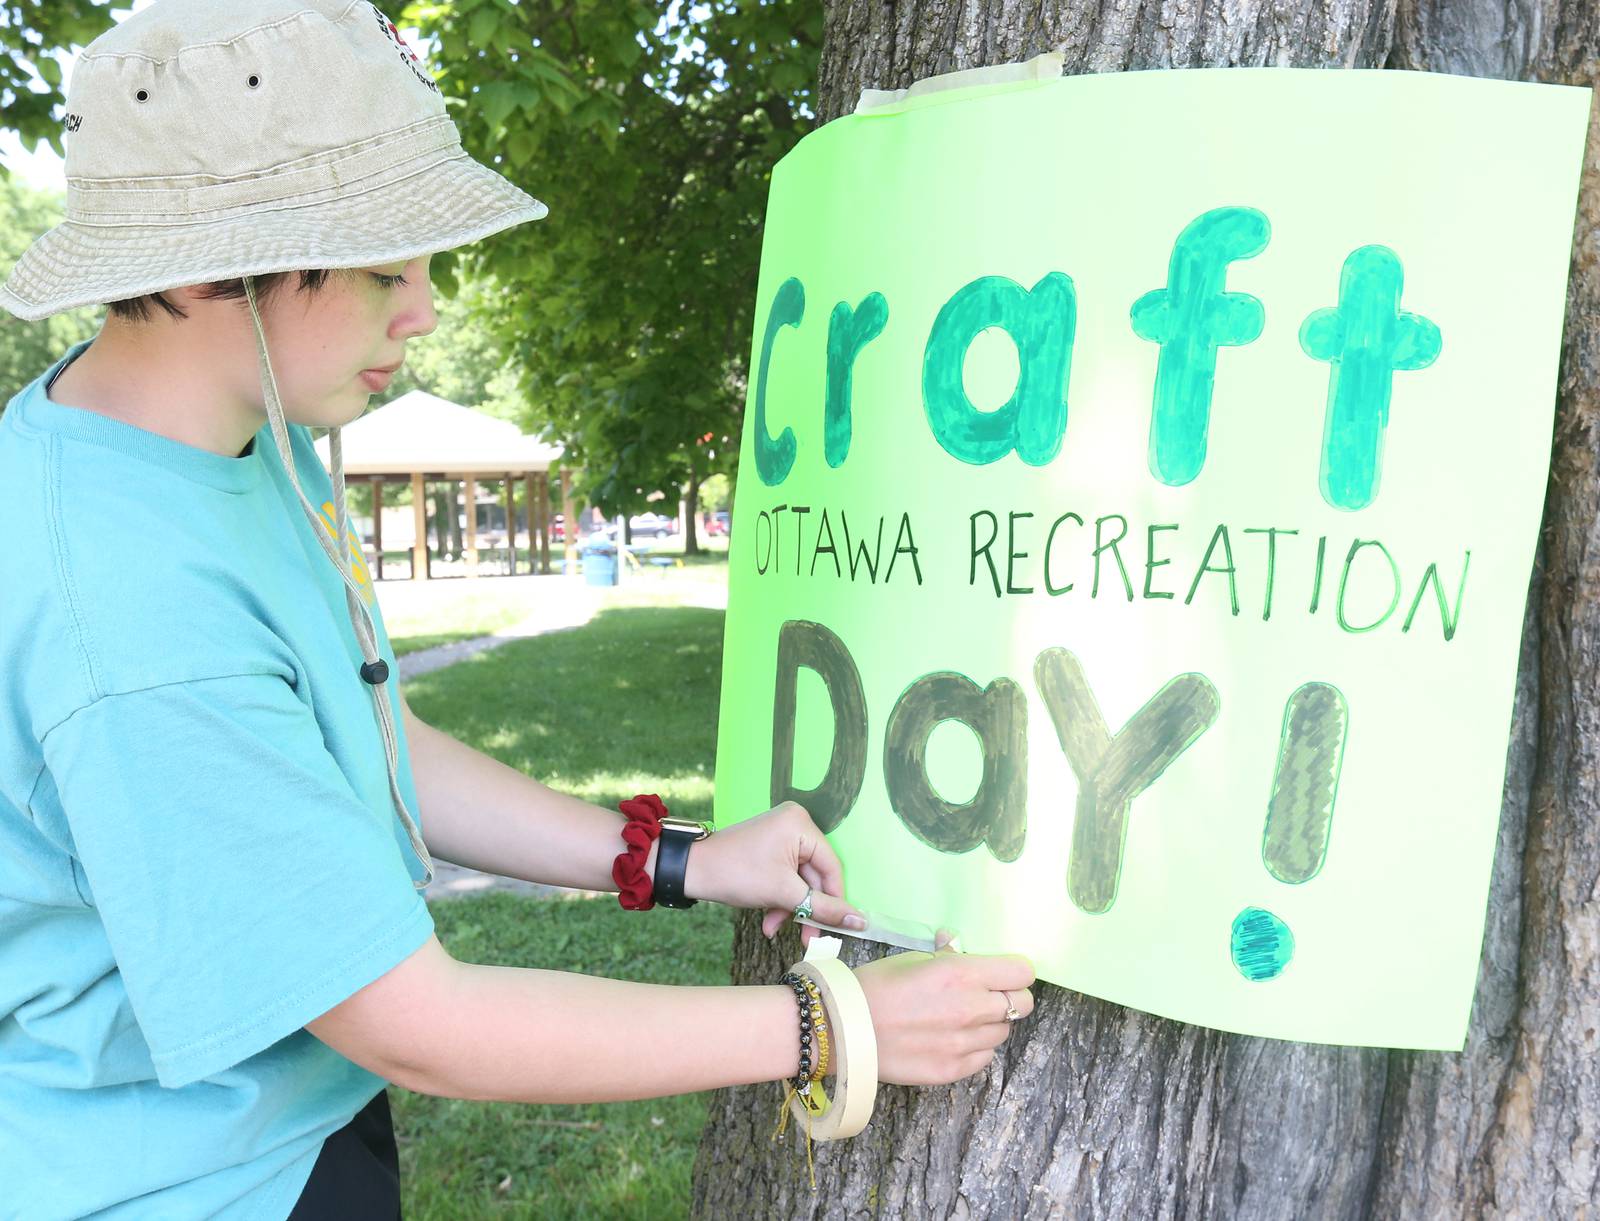 Ottawa Recreation summer youth activities begin second week of June